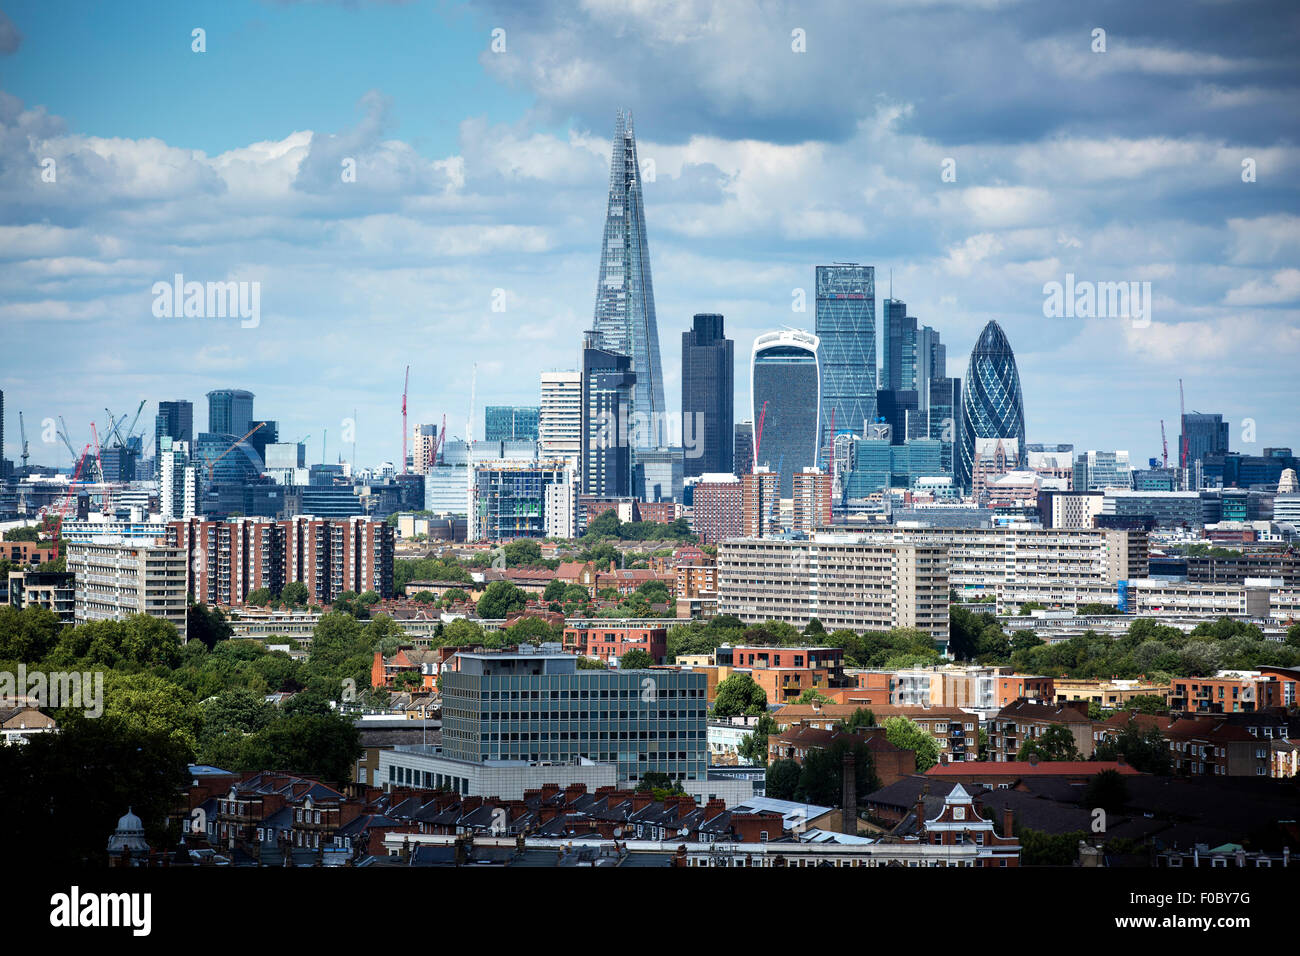 london-skyline-including-the-shard-F0BY7G.jpg